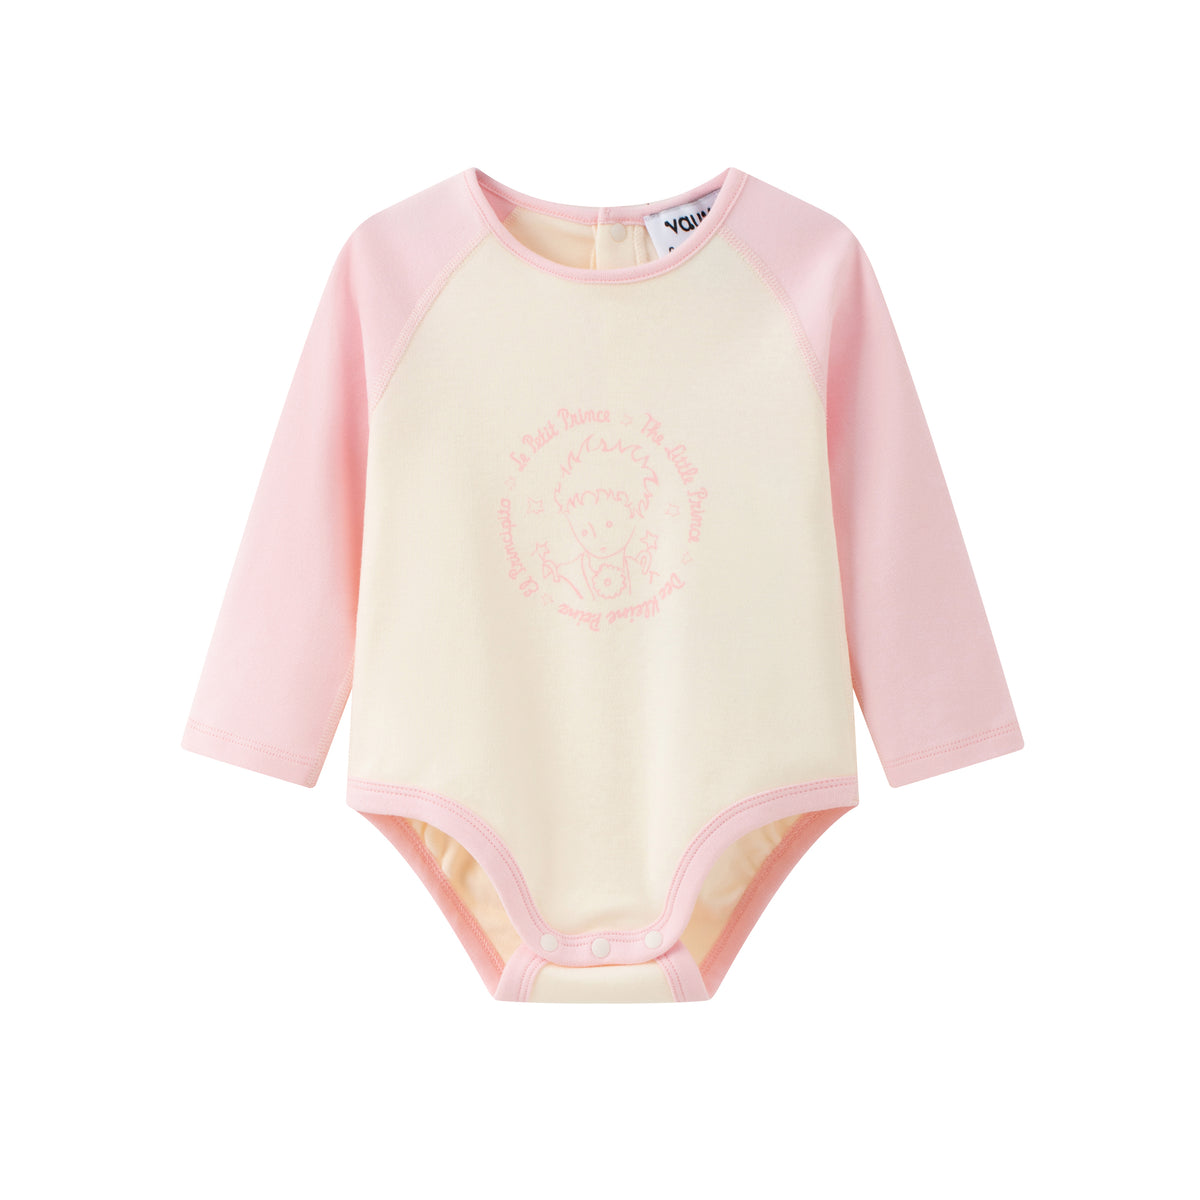 Vauva x Le Petit Prince - Baby Logo Print Longsleeve Bodysuit (Pink)